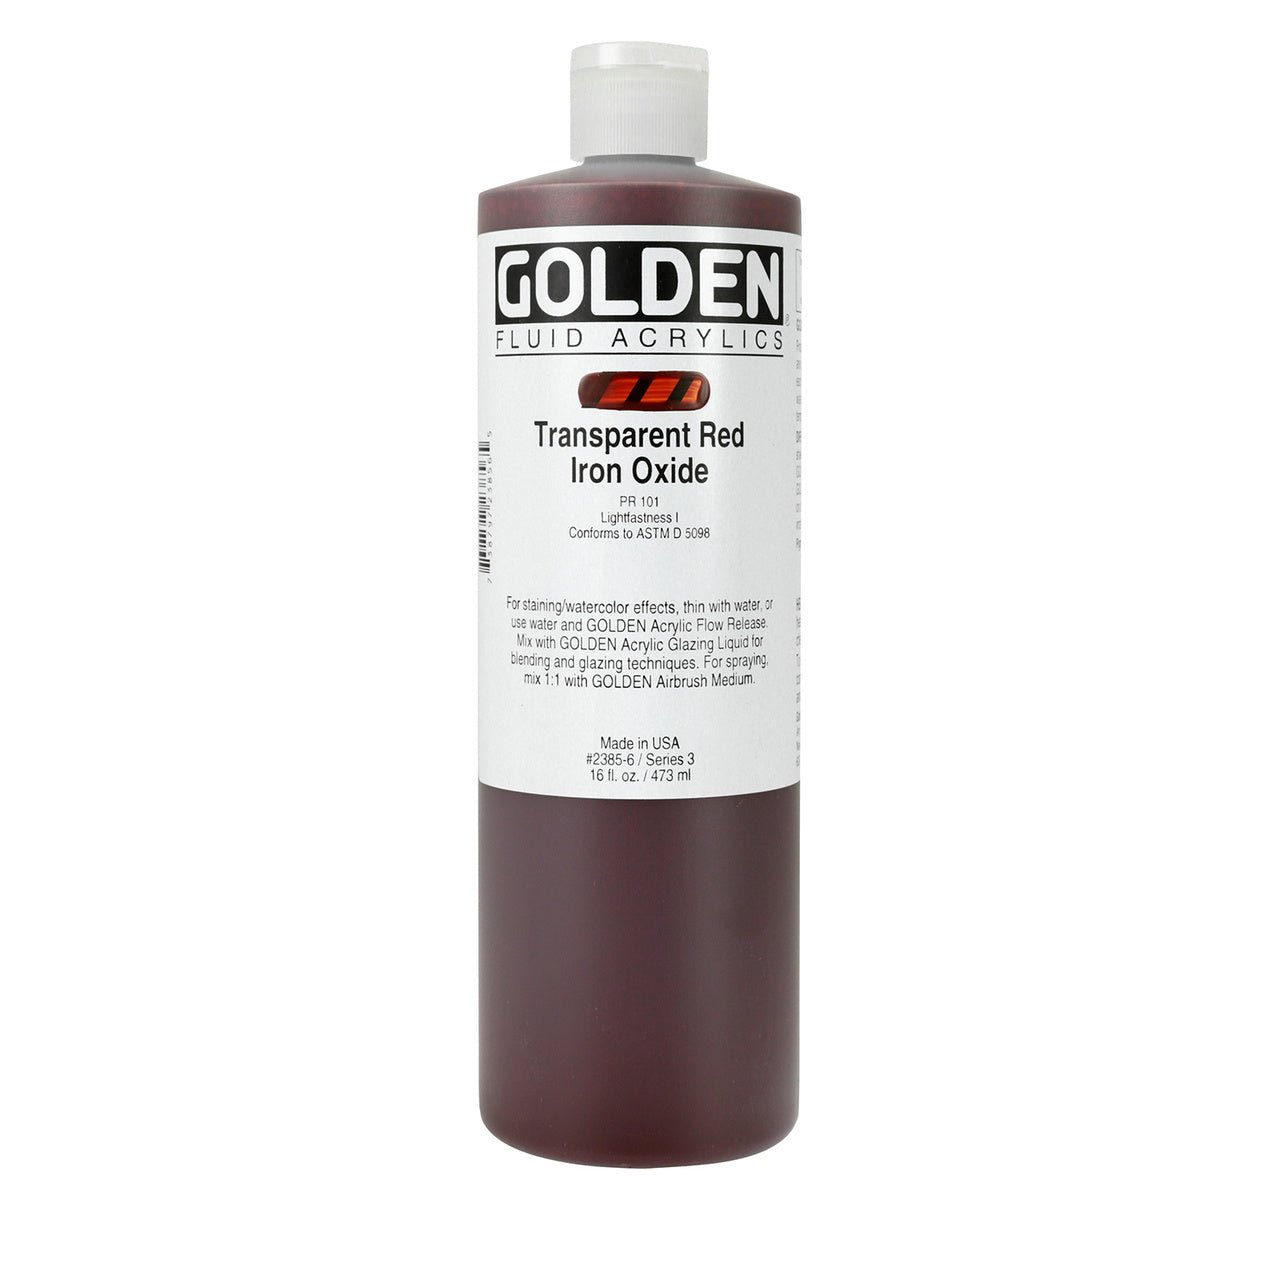 Golden Fluid Acrylic Transparent Red Iron Oxide 16 oz - merriartist.com